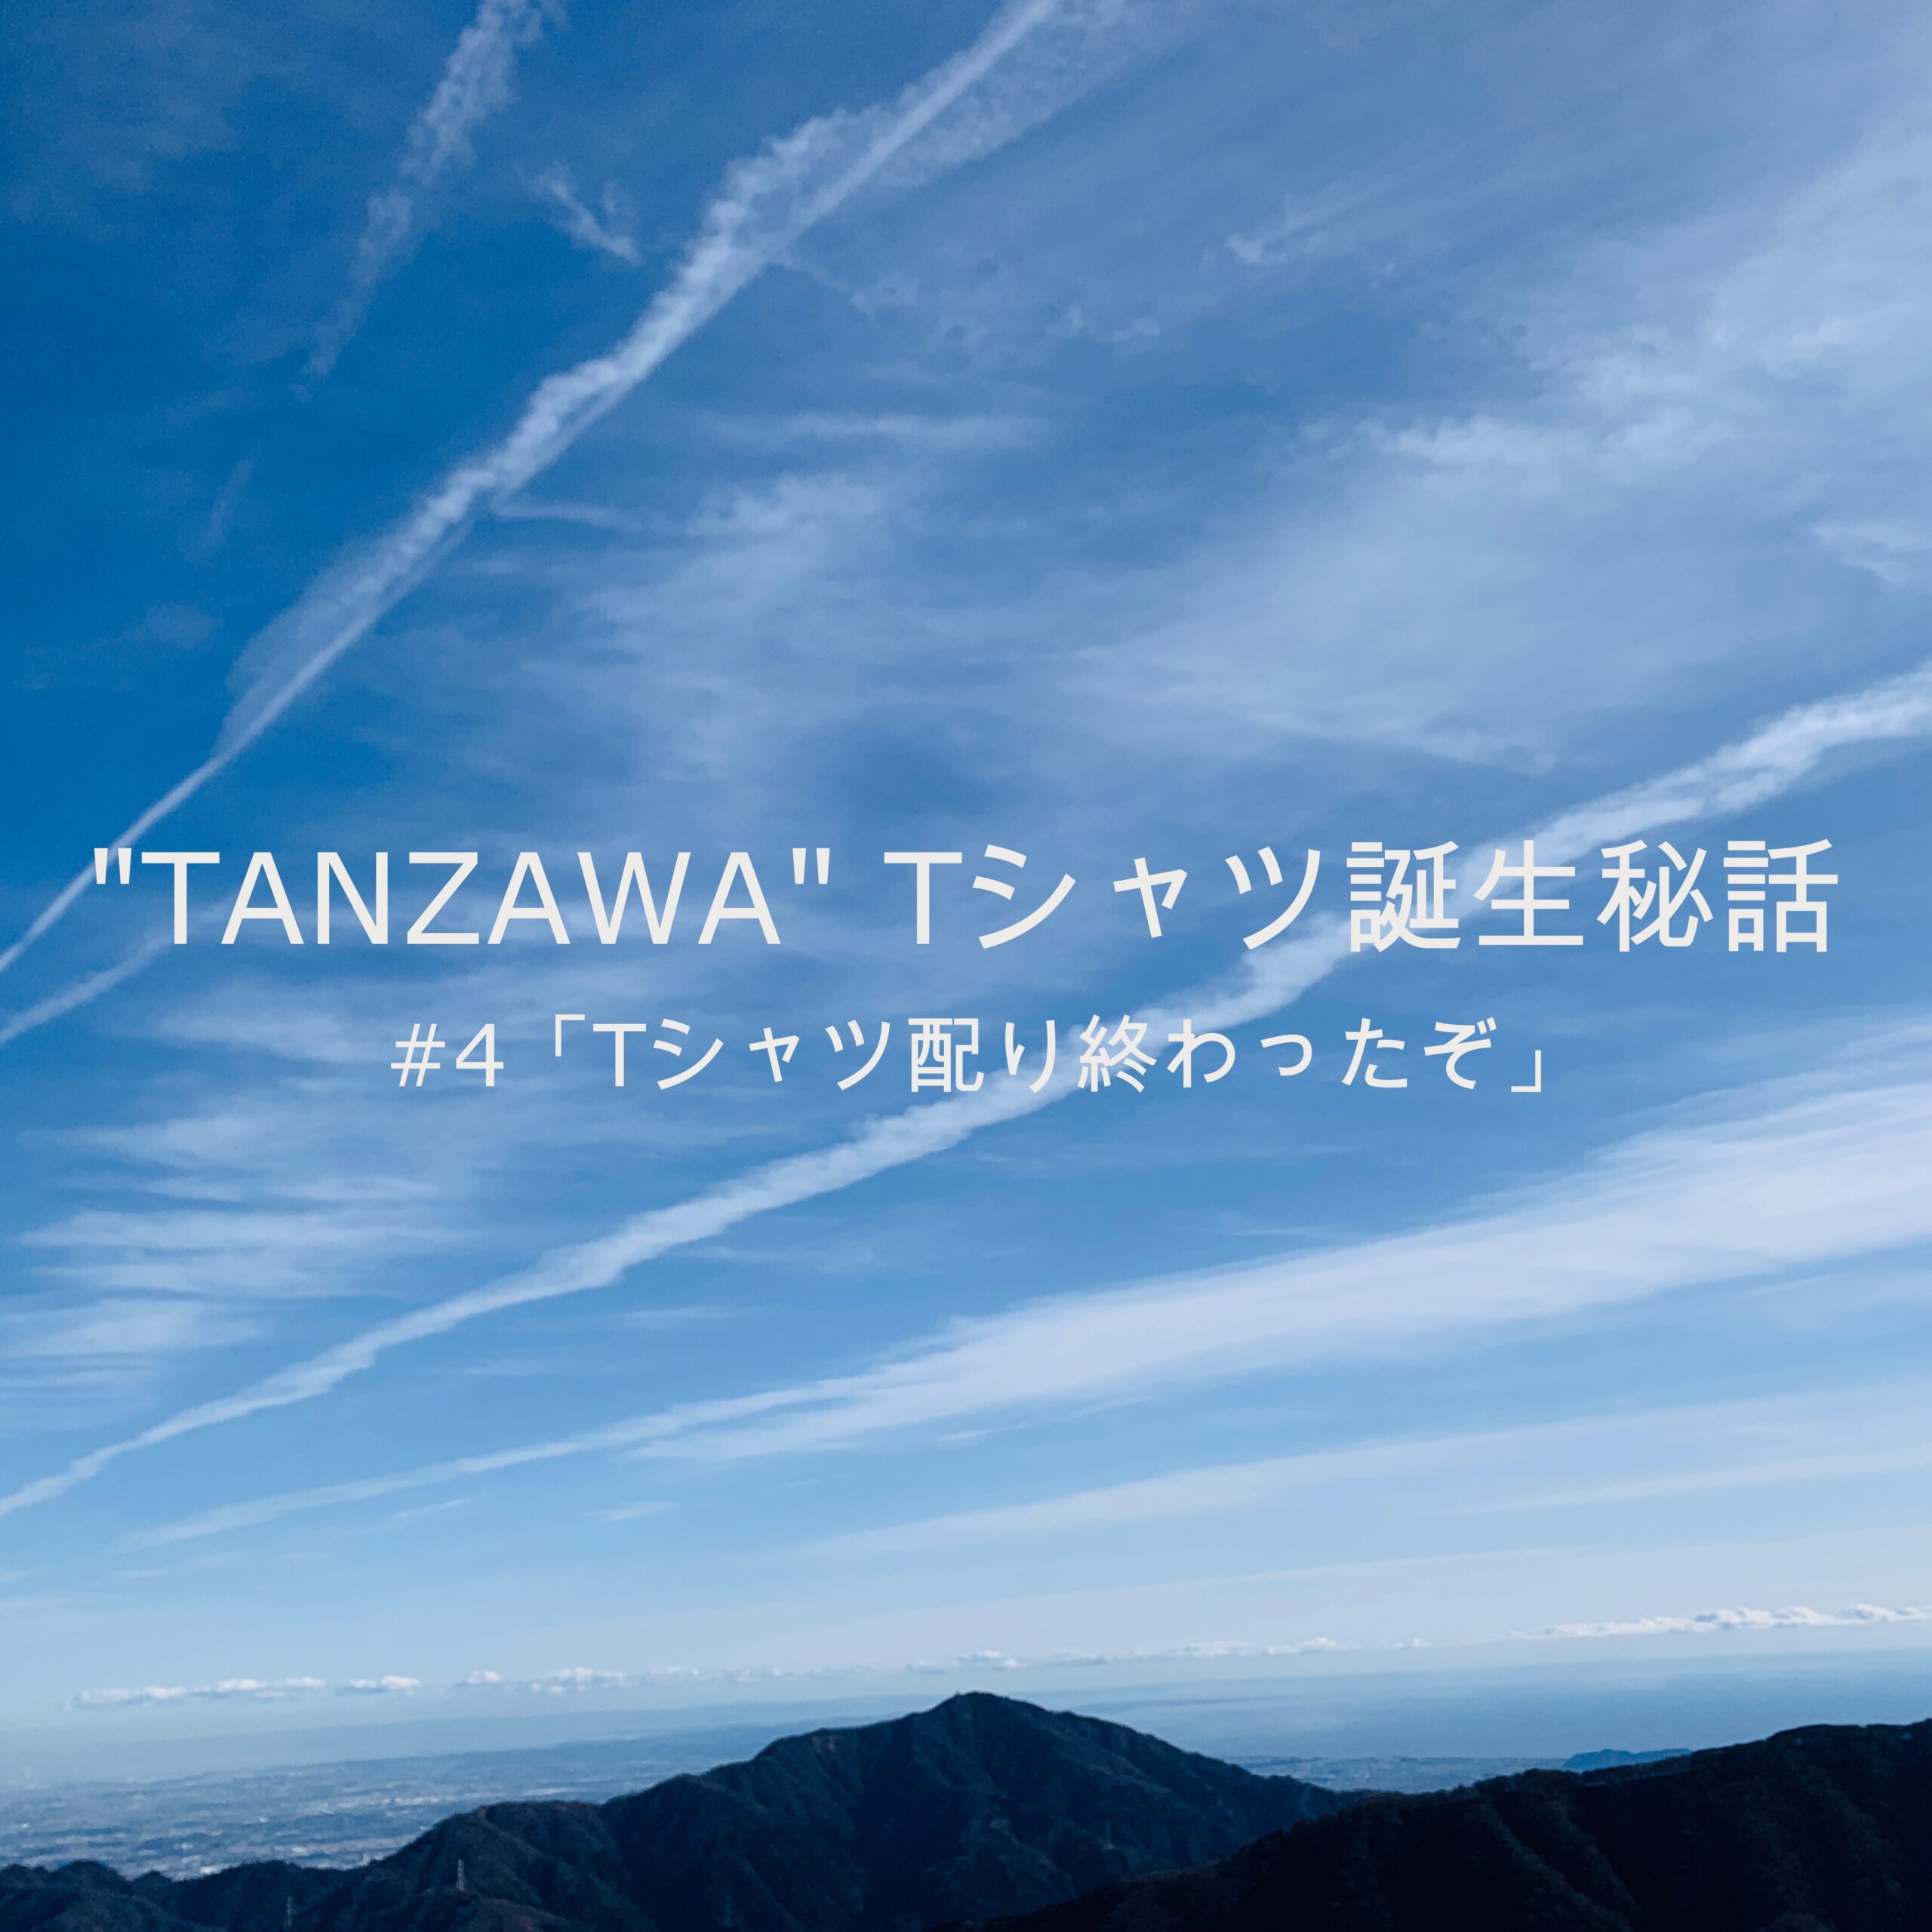 "TANZAWA" Tシャツ誕生　#4「Tシャツ配り終わったぞ」